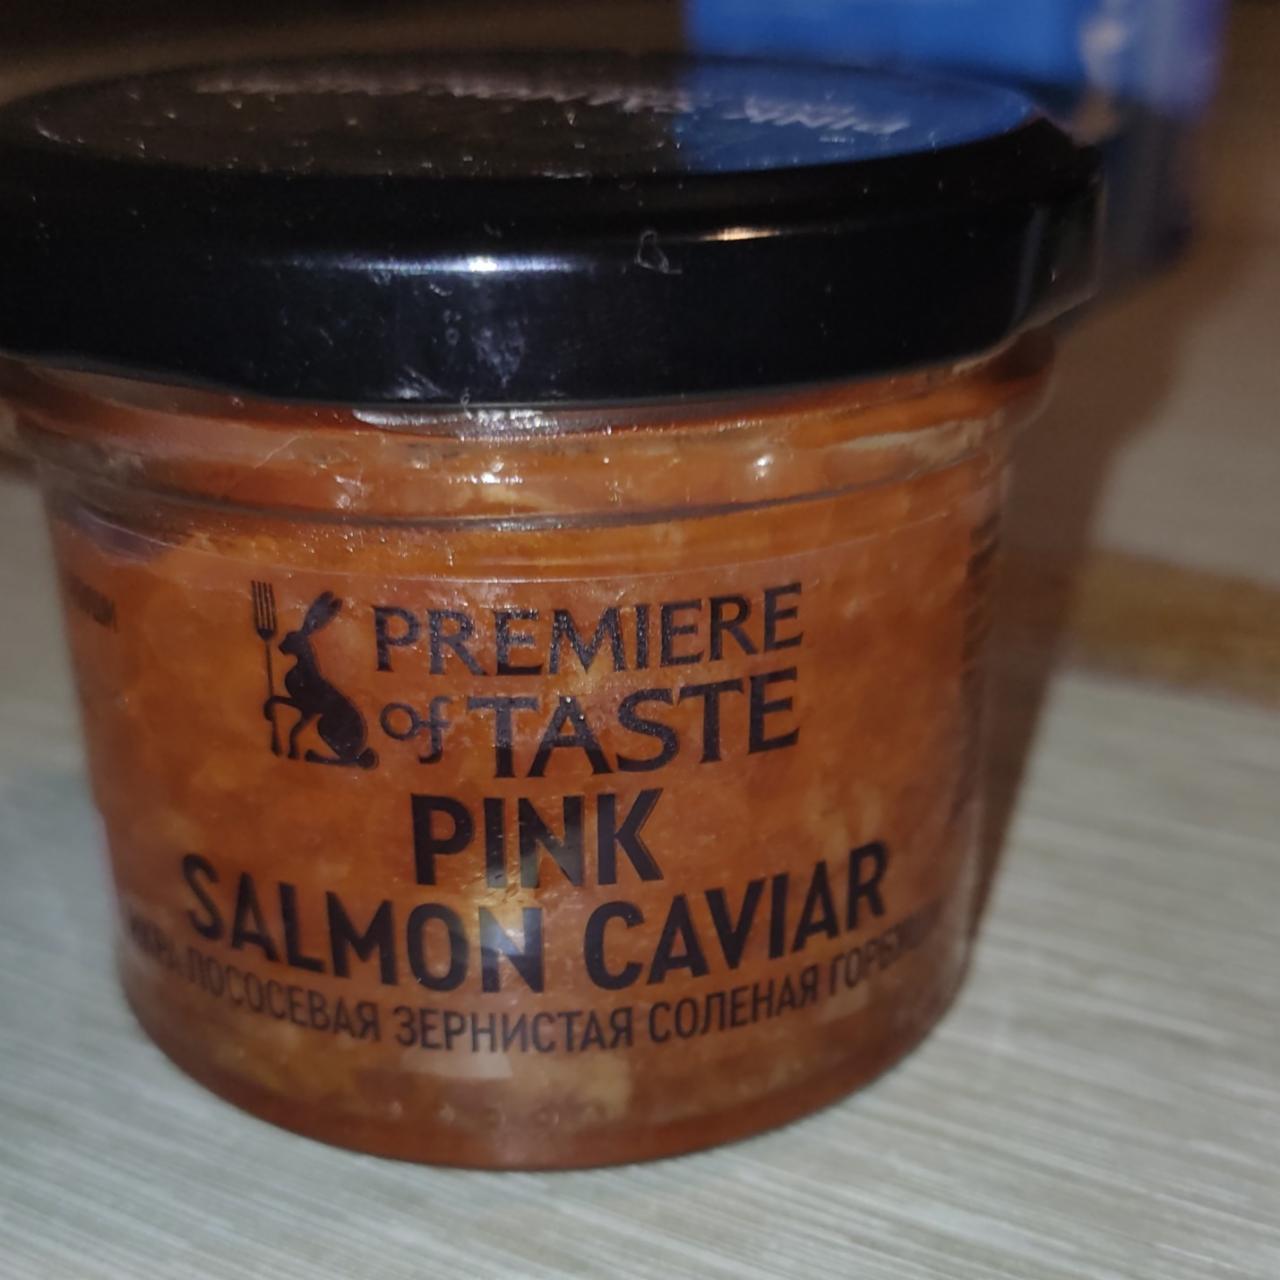 Фото - Икра зернистая солёная лососевая горбуши pink salmon caviar Premiere of taste